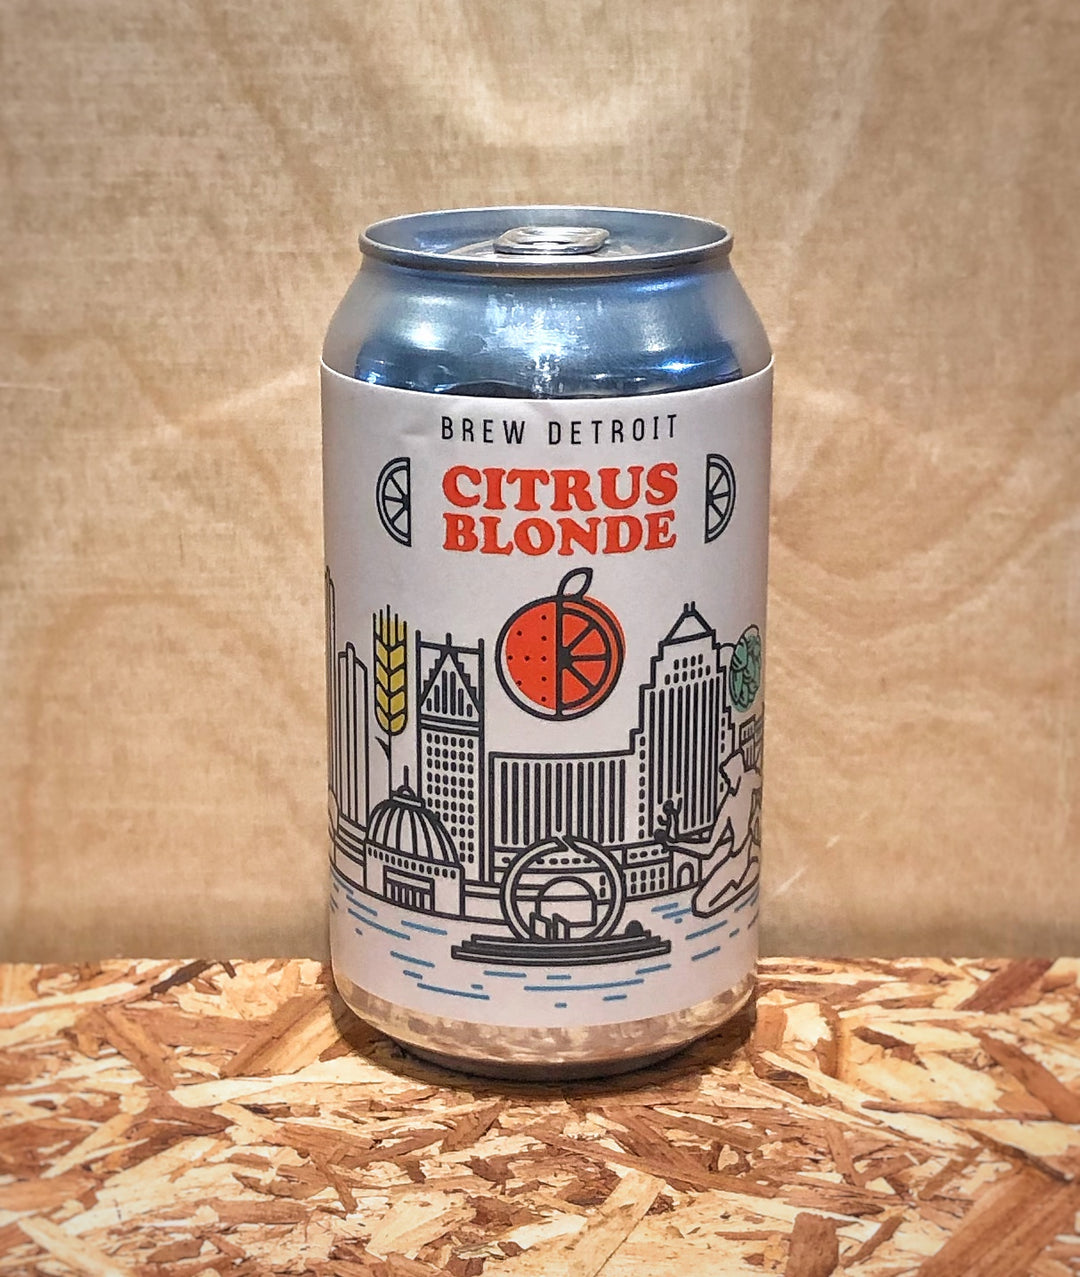 Brew Detroit 'Citrus Blonde' American Blonde with Citrus Peel (Detroit, MI)